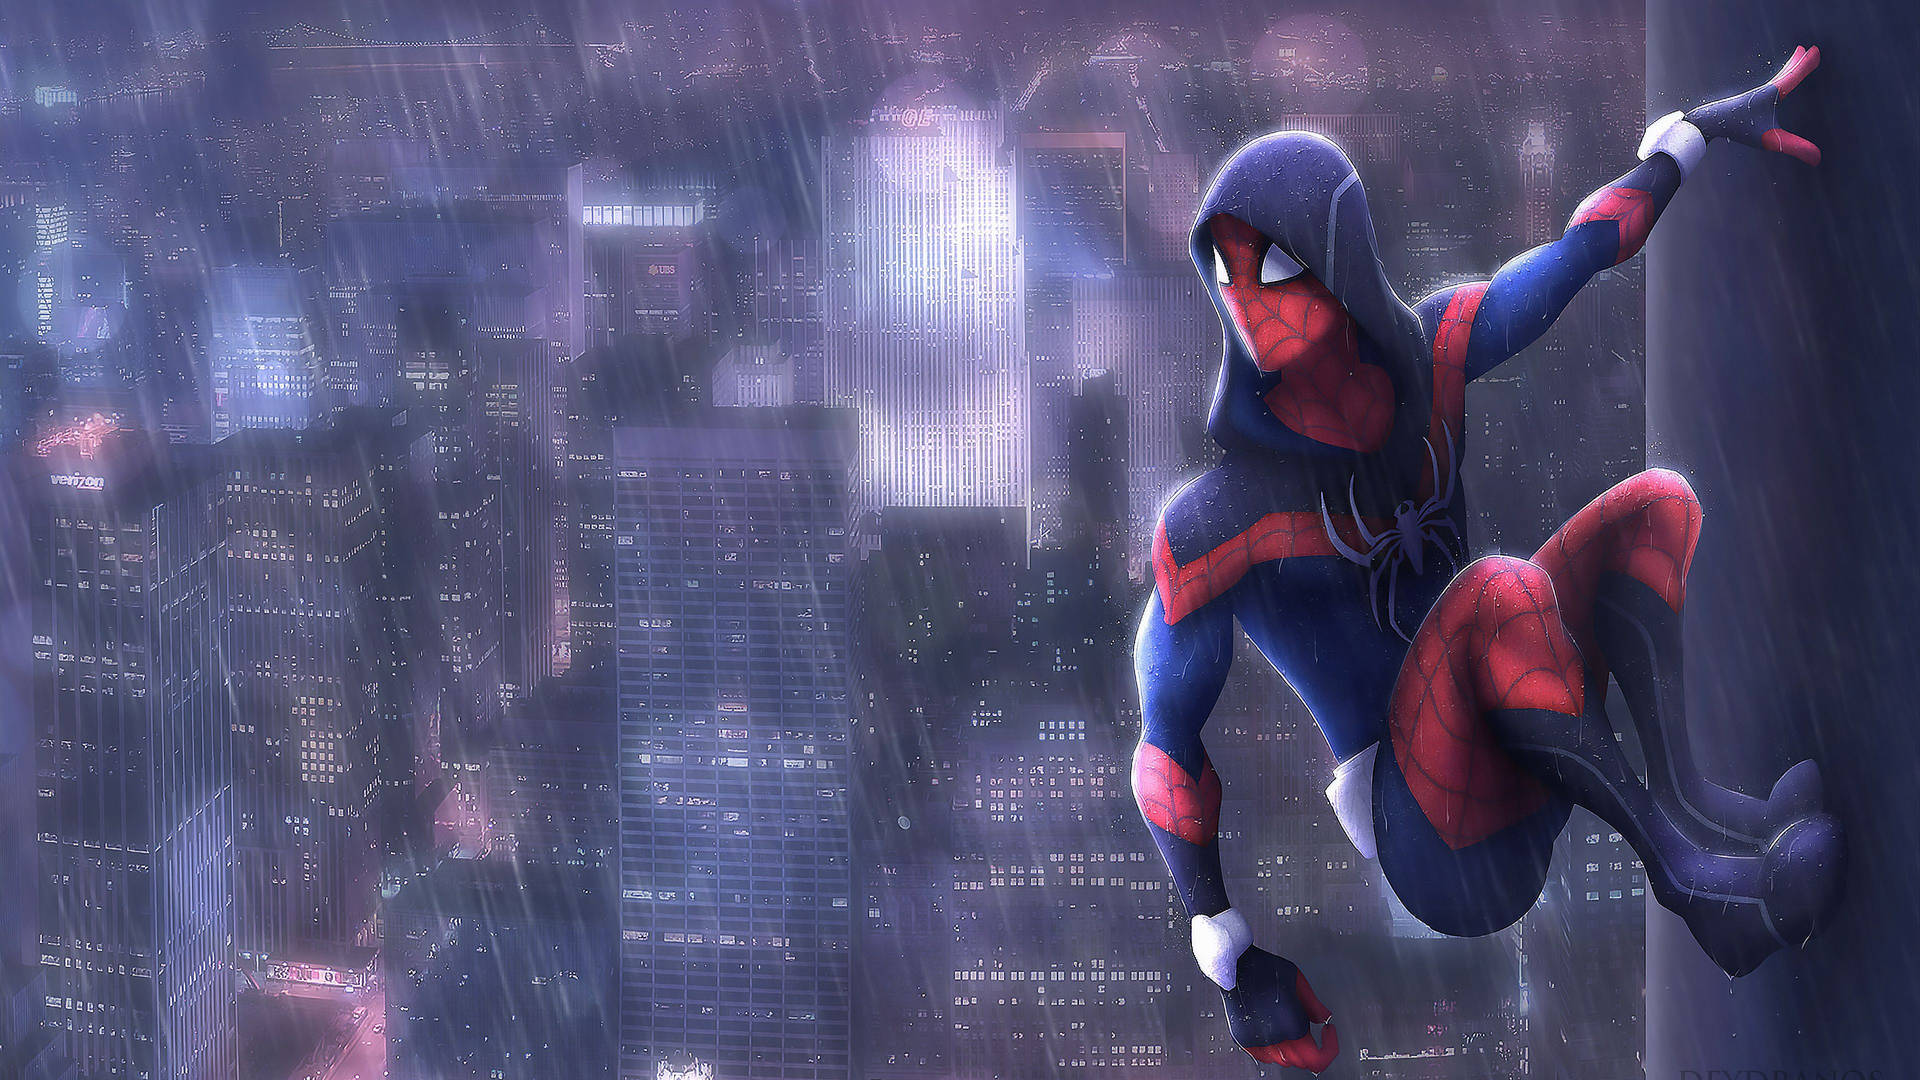 Spiderman bravely standing tall in the rain Wallpaper